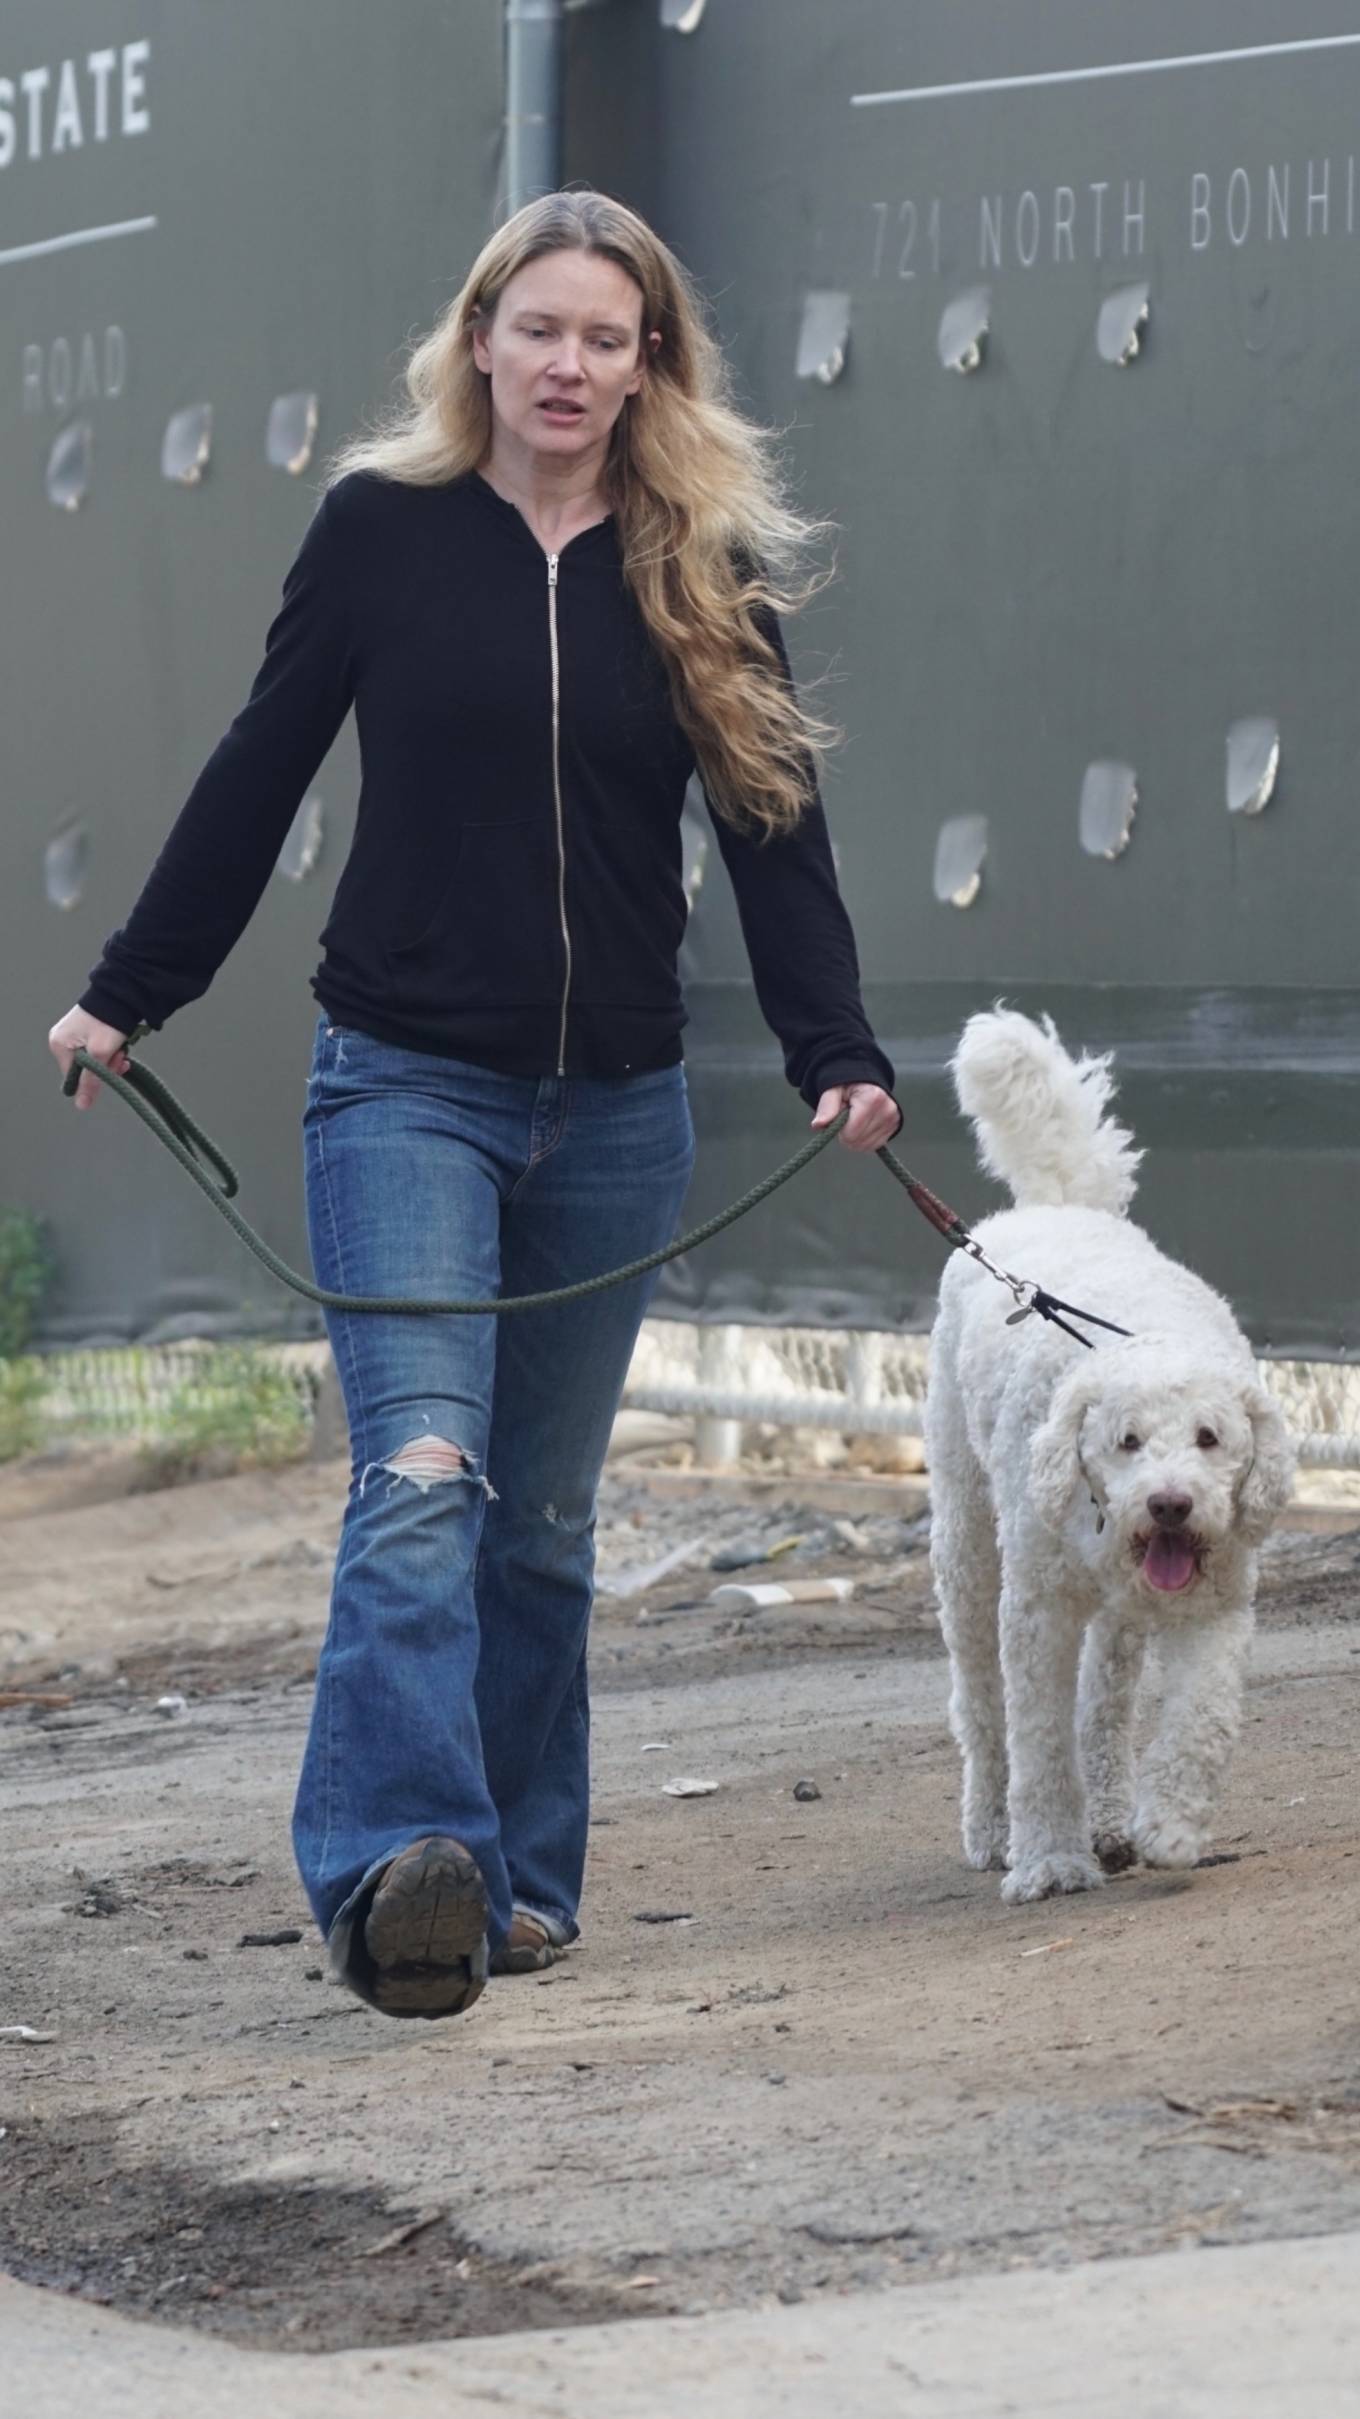 Justine Musk - Elon Musks Ex Wife Justine Musk seen walking her dog in Brentwood